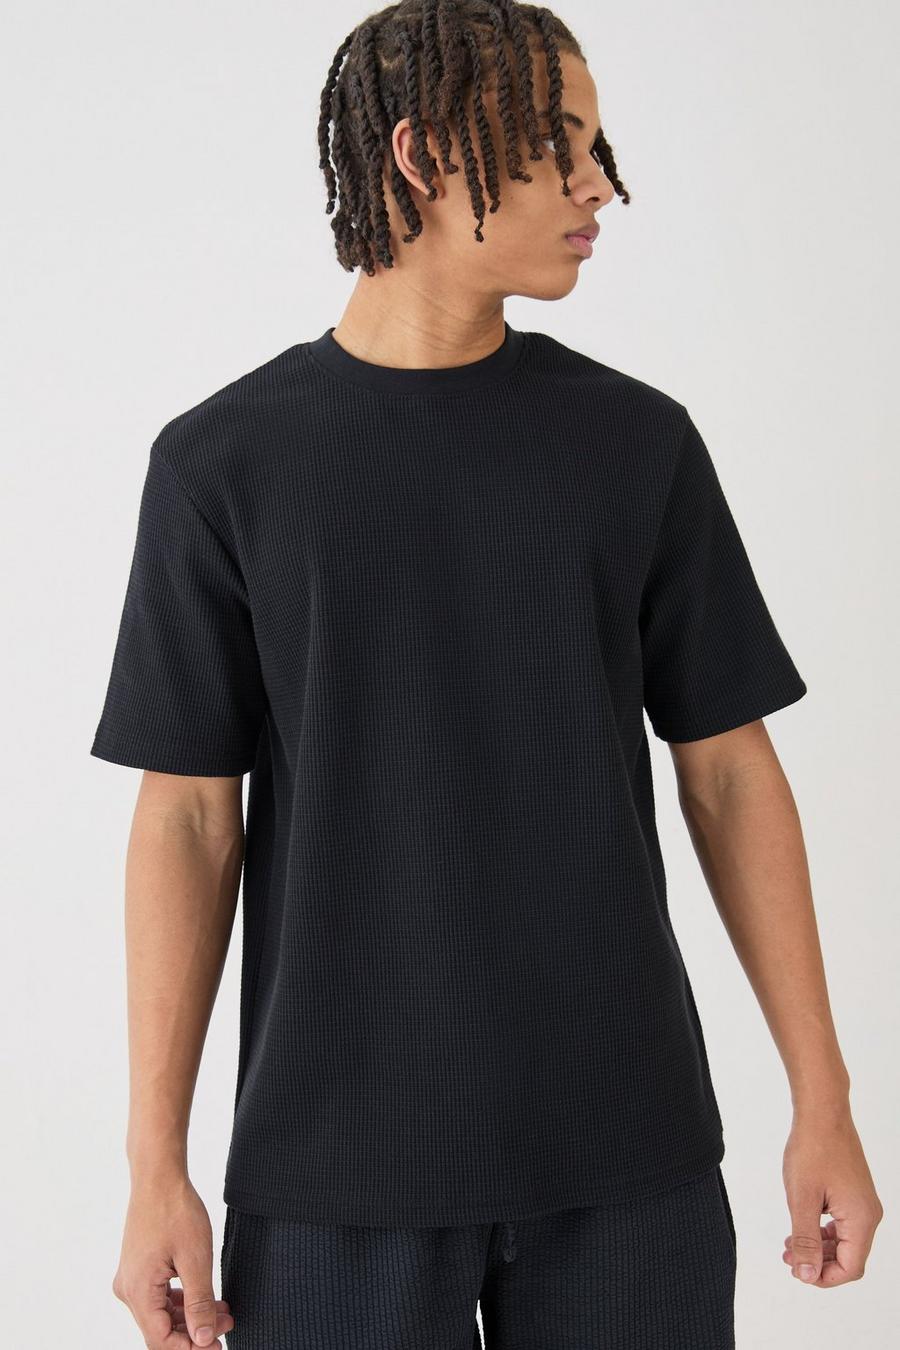 Camiseta de tela gofre, Black